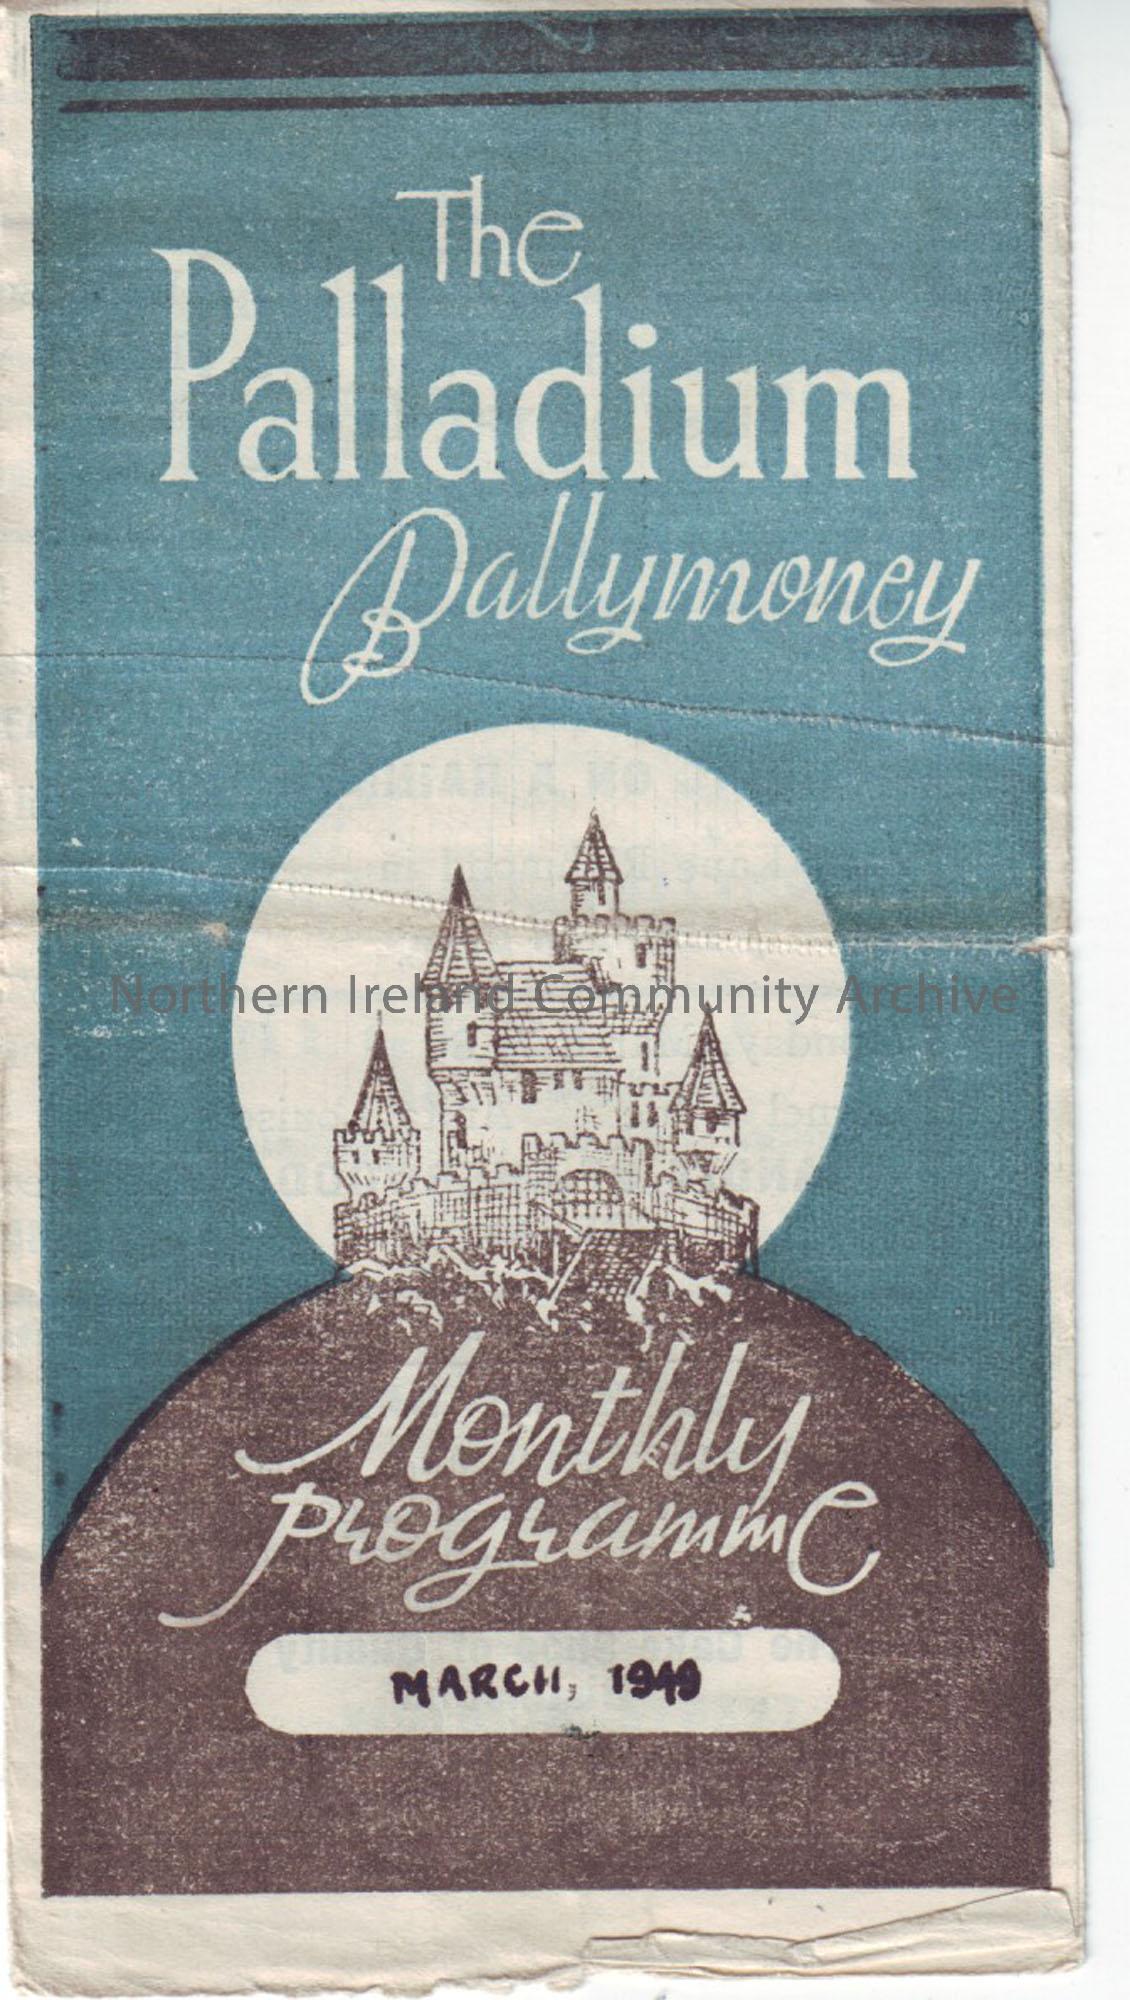 blue monthly programme for Ballymoney Palladium cinema- March 1949